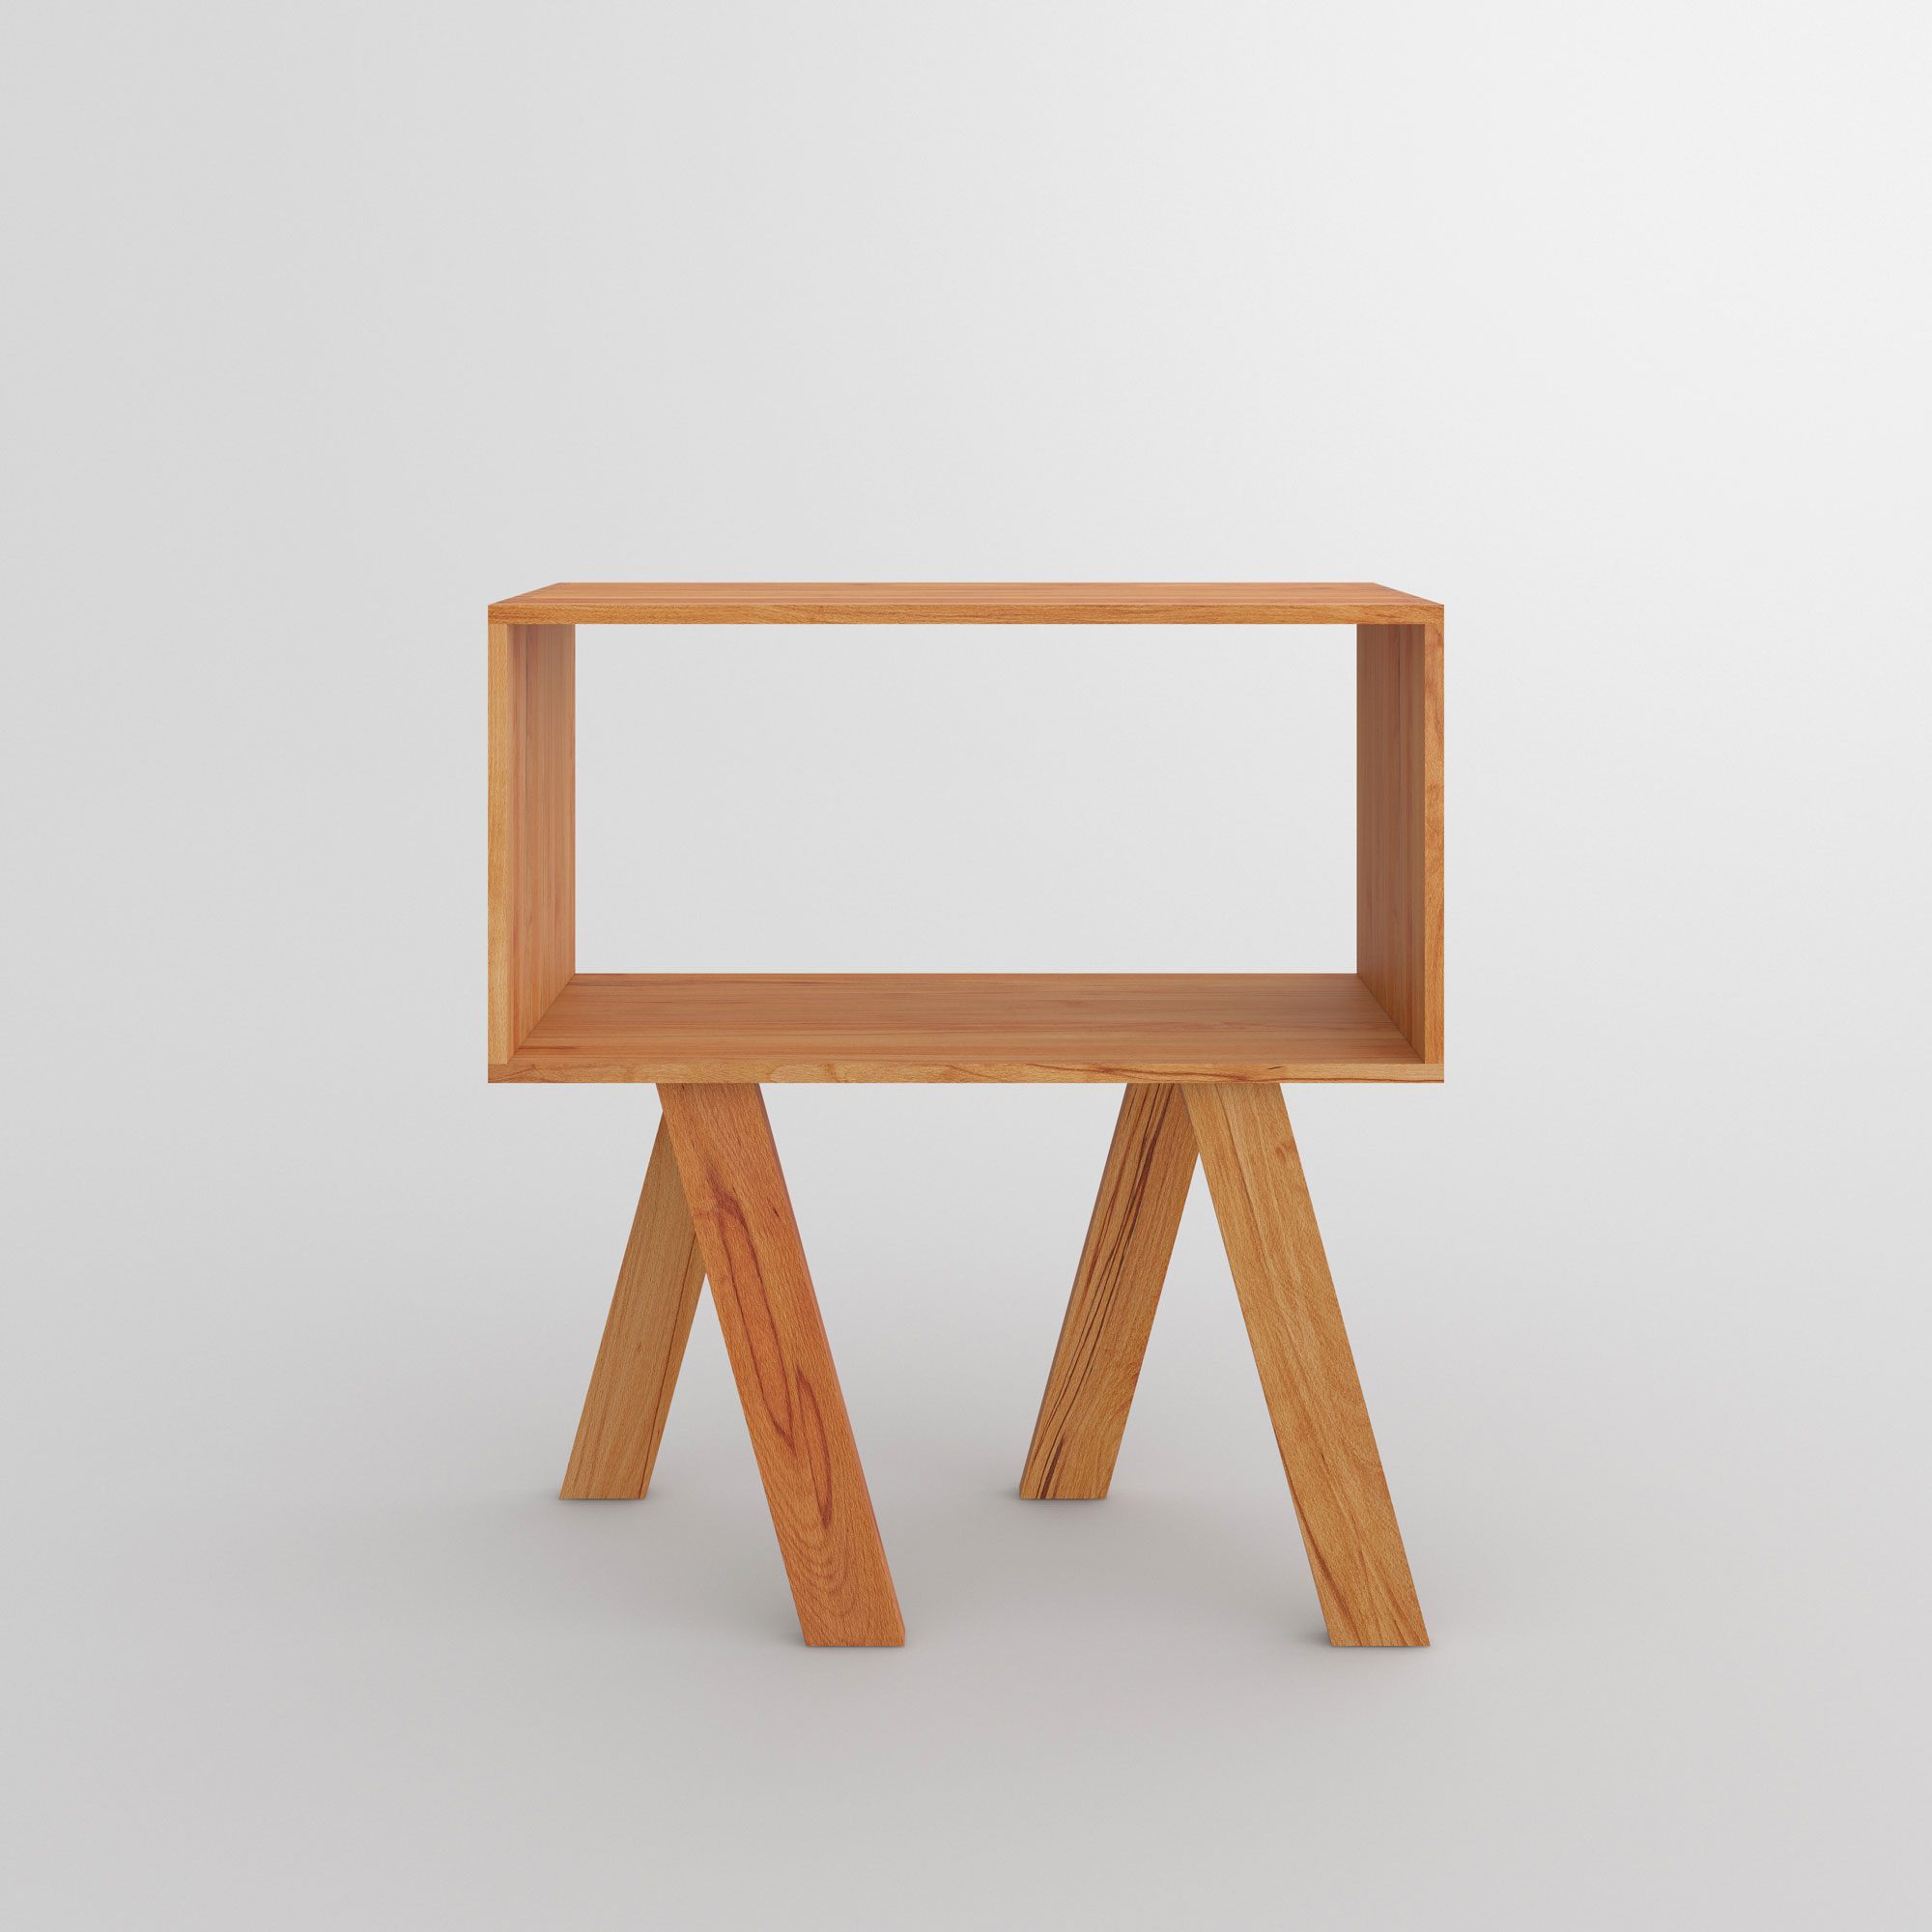 Designer Solid Wood Shelf GO cam3 custom made in solid wood by vitamin design